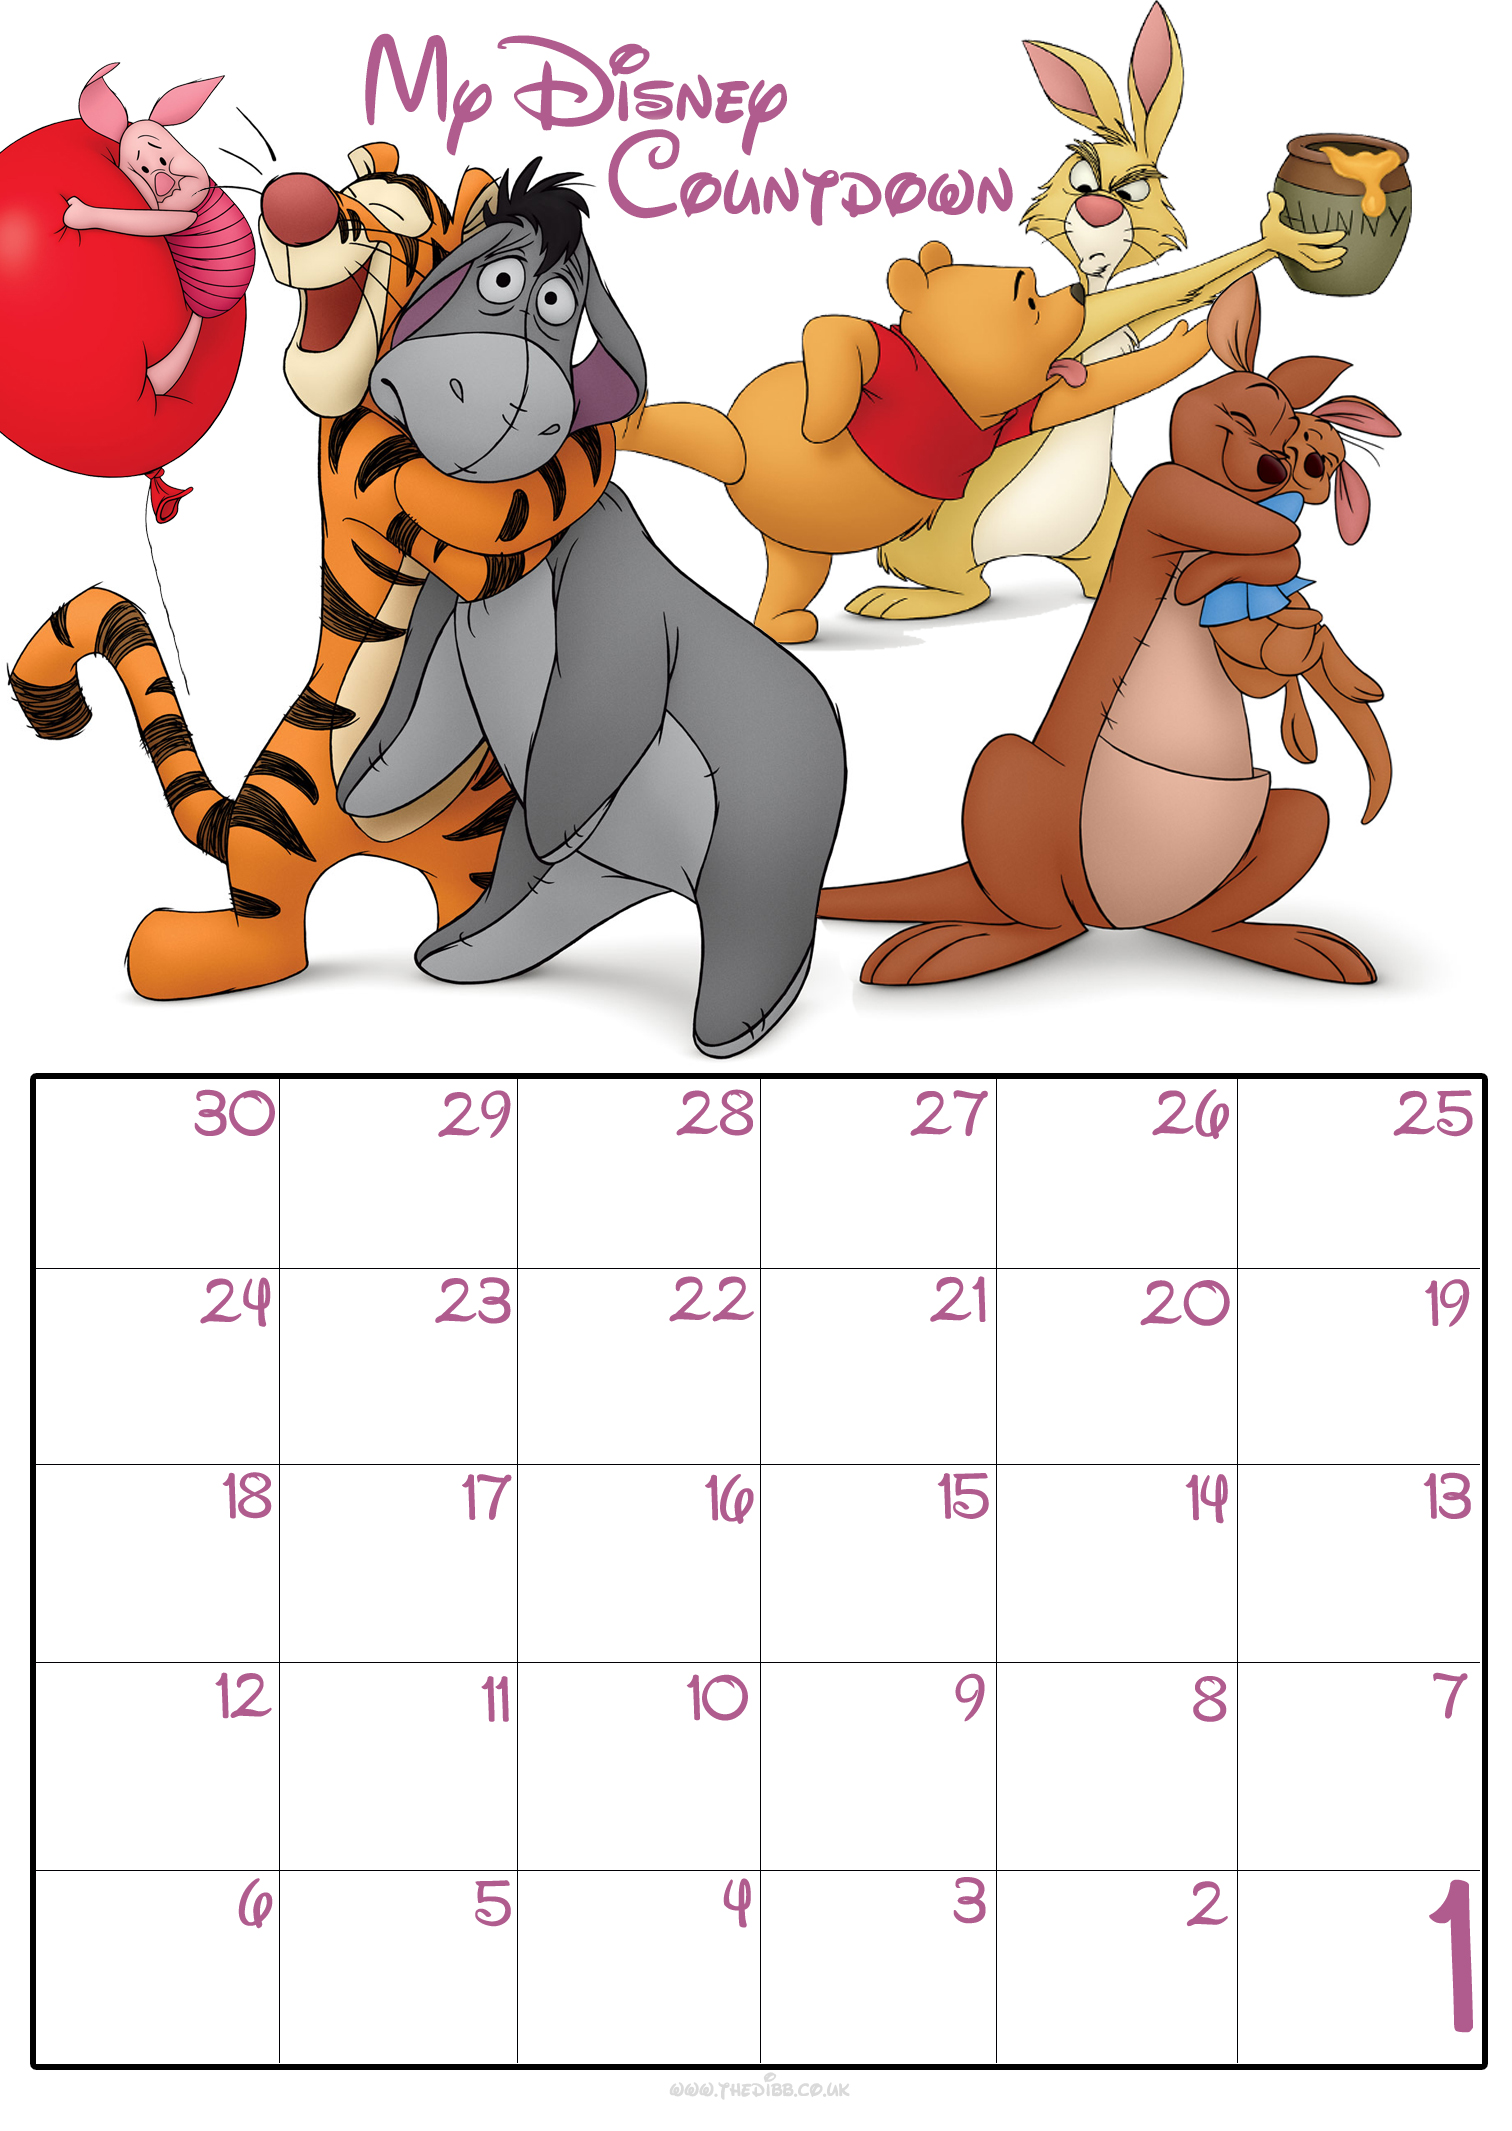 Day Disney Countdown Calendar S